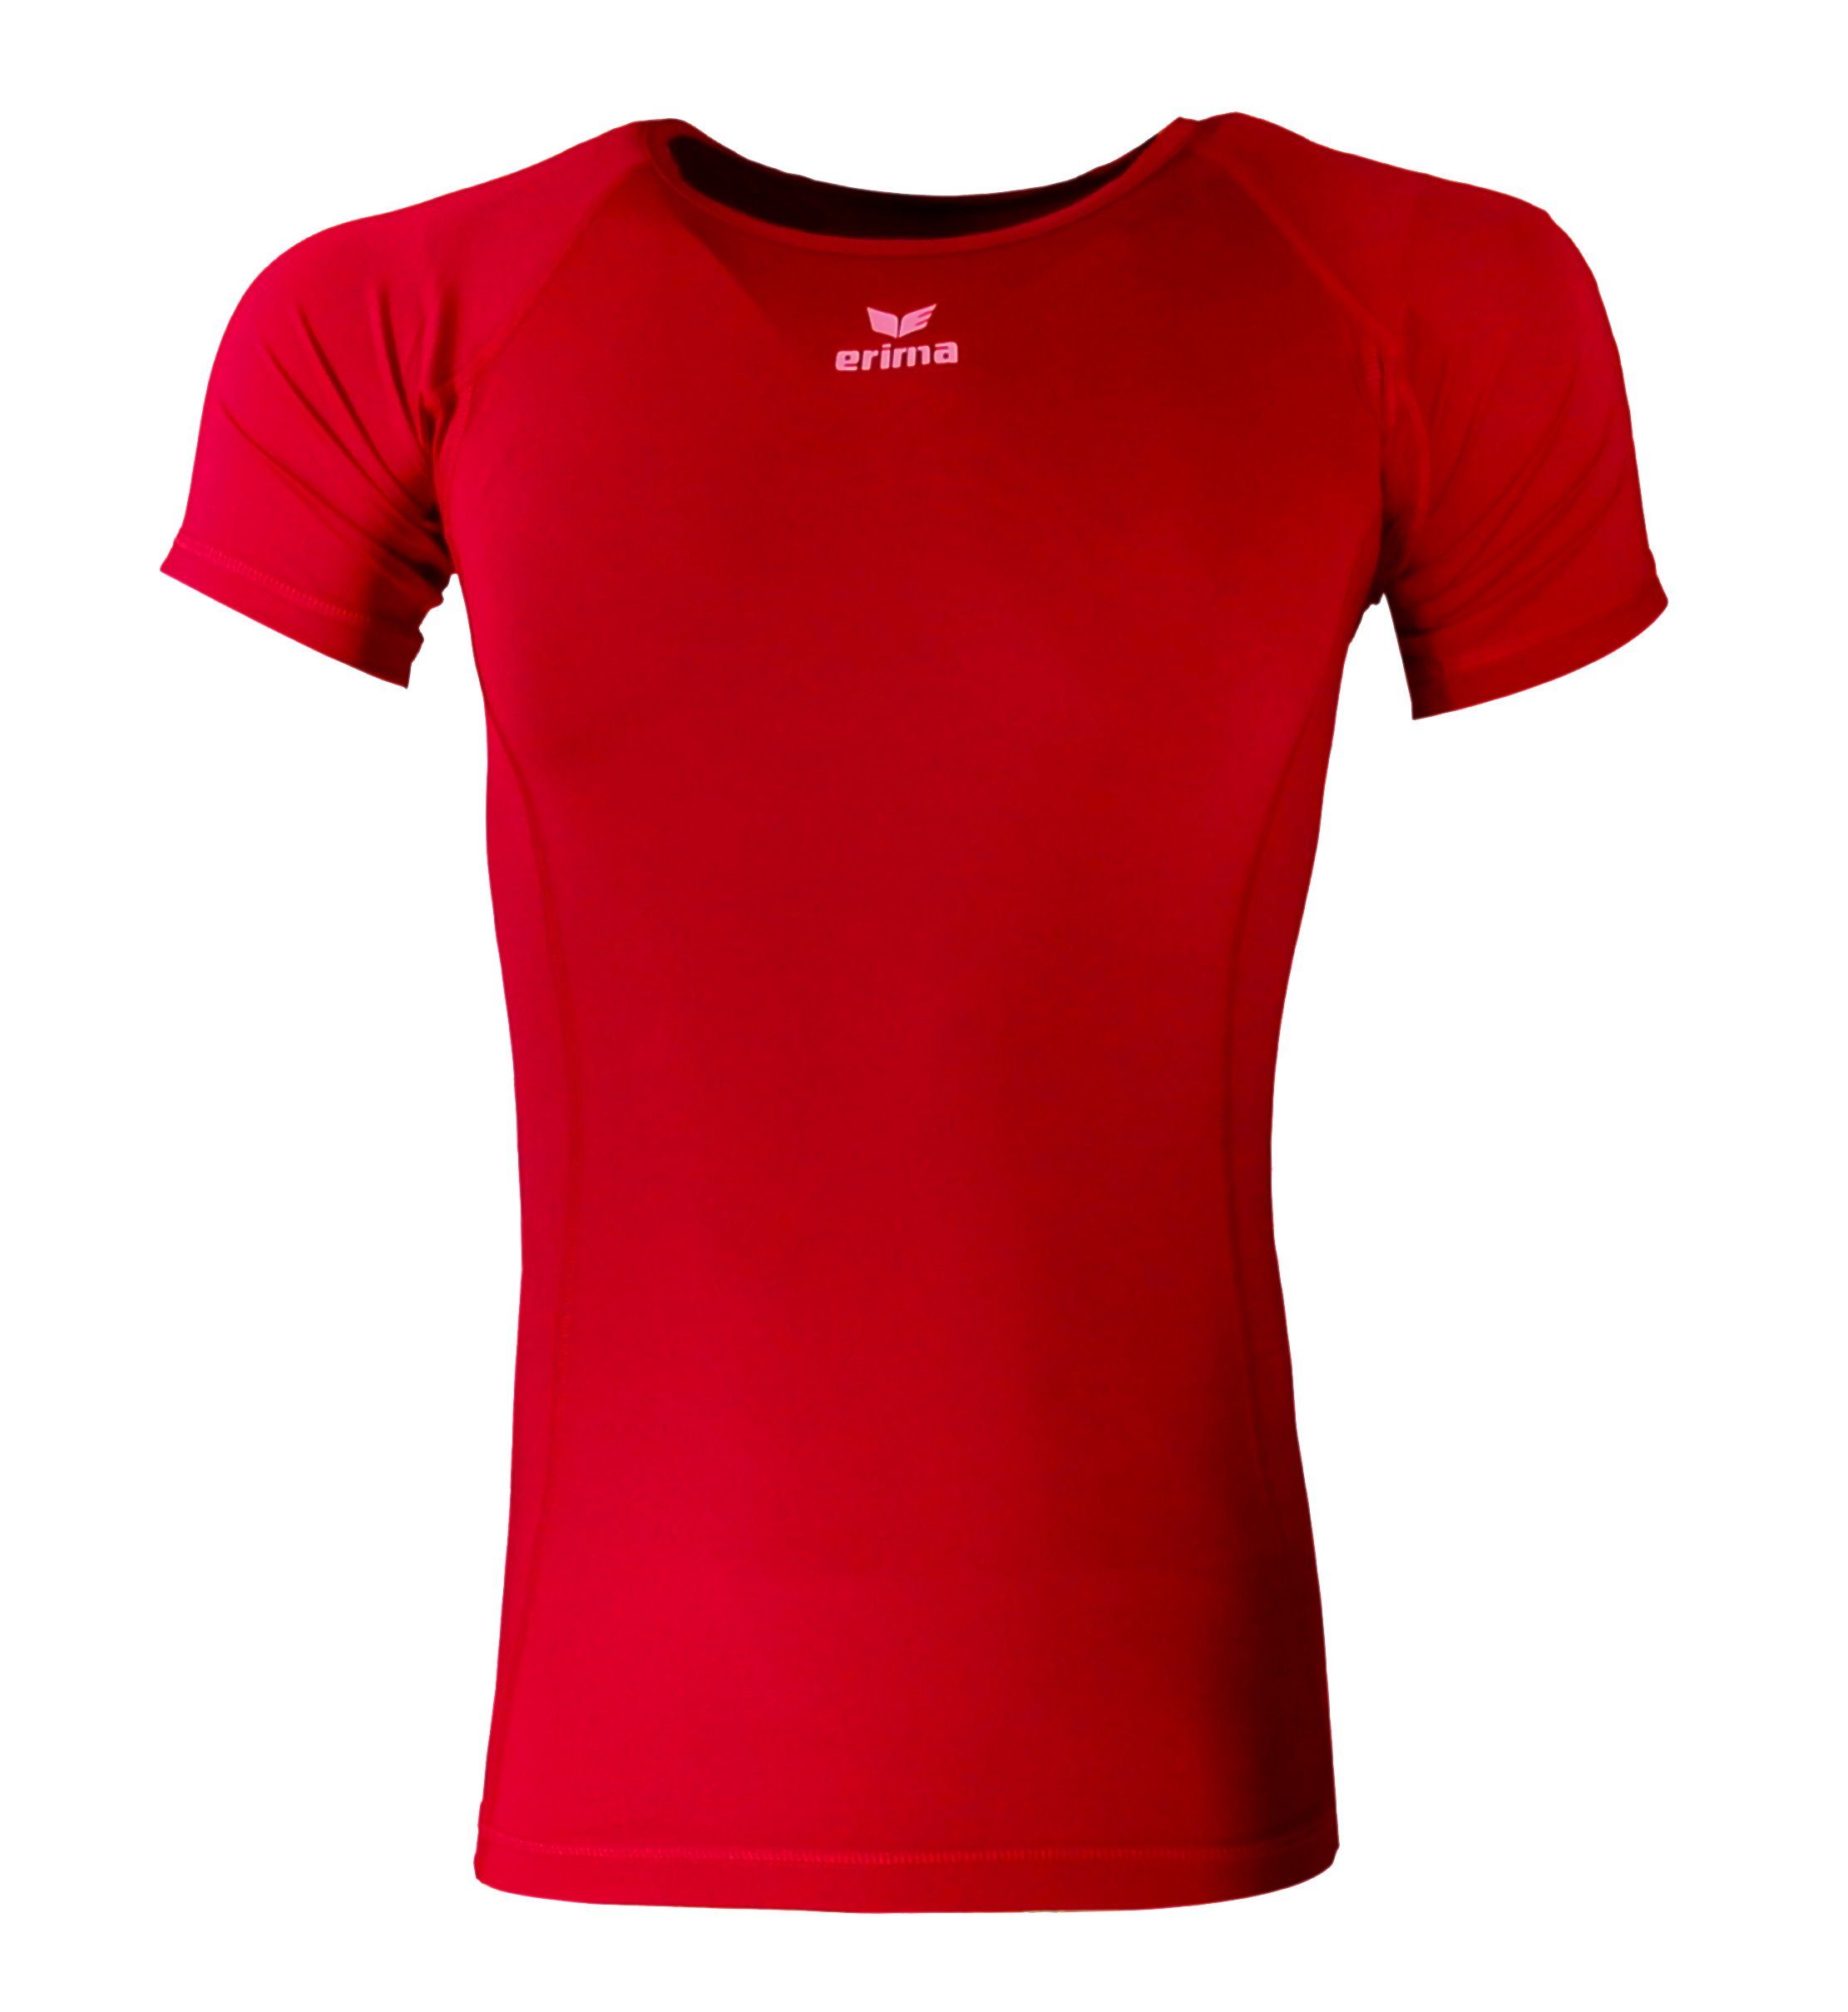 Funktionsshirt Training Rot T-Shirt Sport Erima Shirt Fussball Laufen Support Laufshirt Unisex Sportshirt